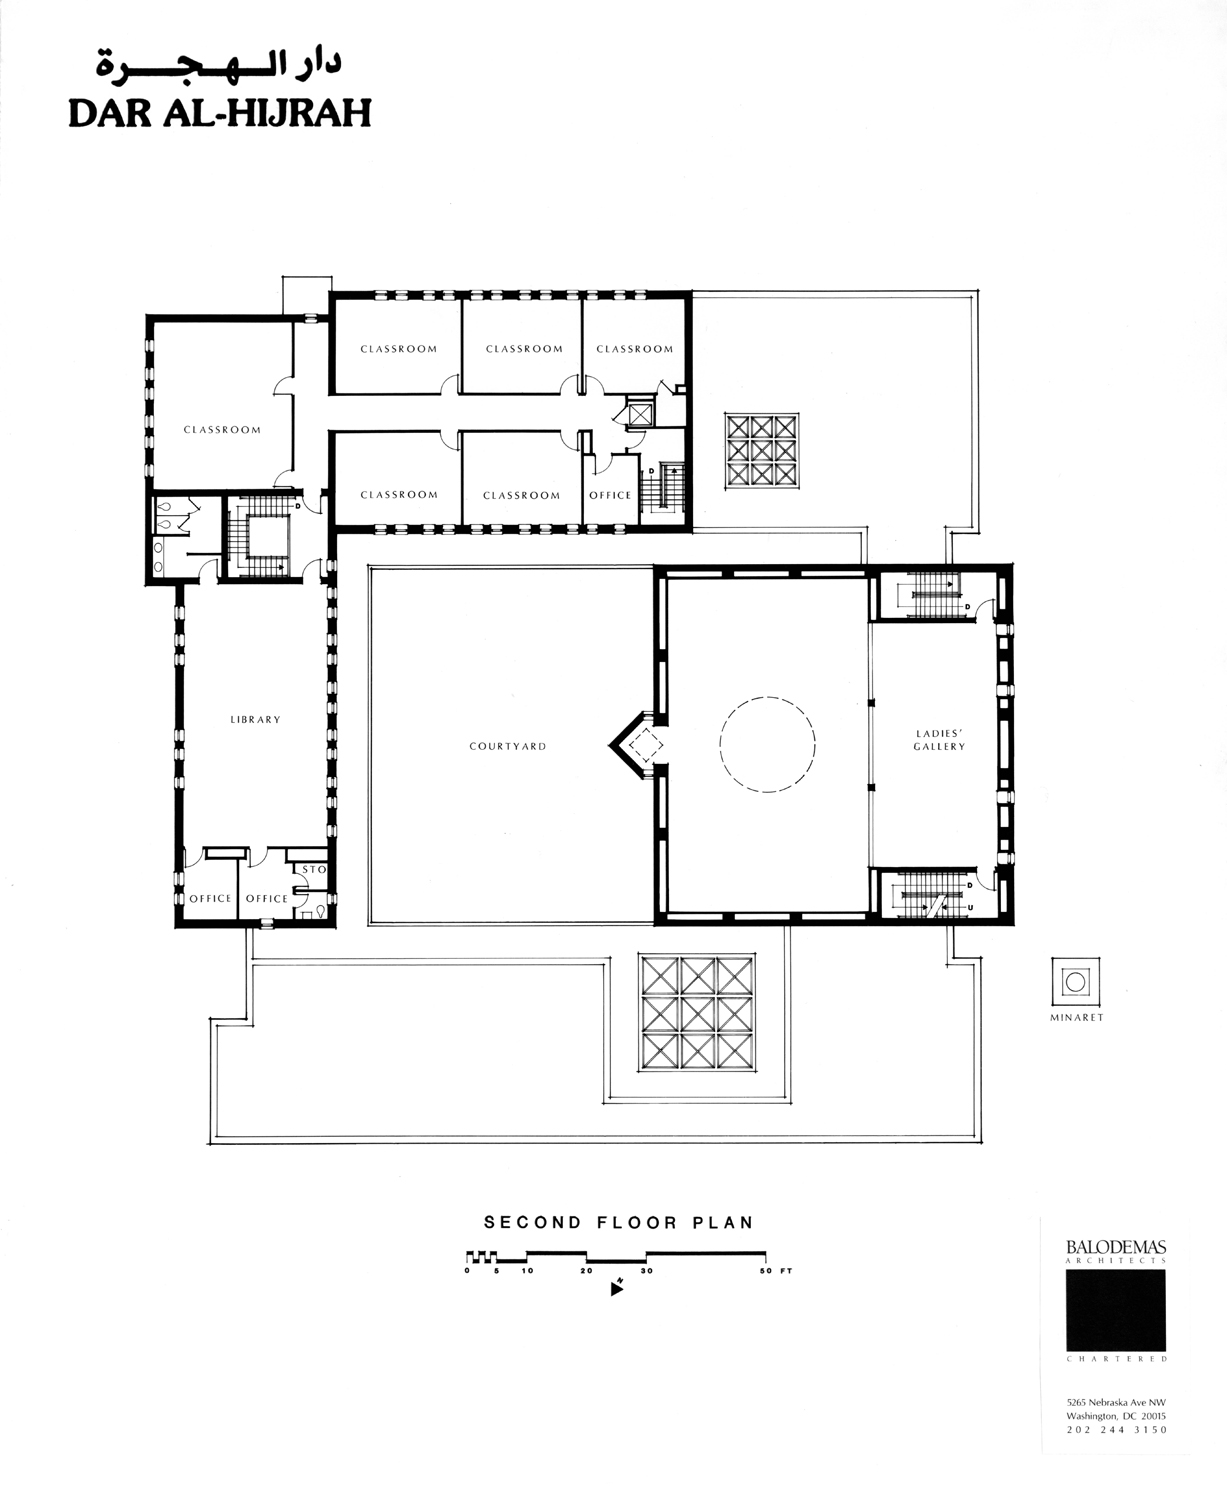 Dar Al-Hijrah Islamic Center - Second floor plan